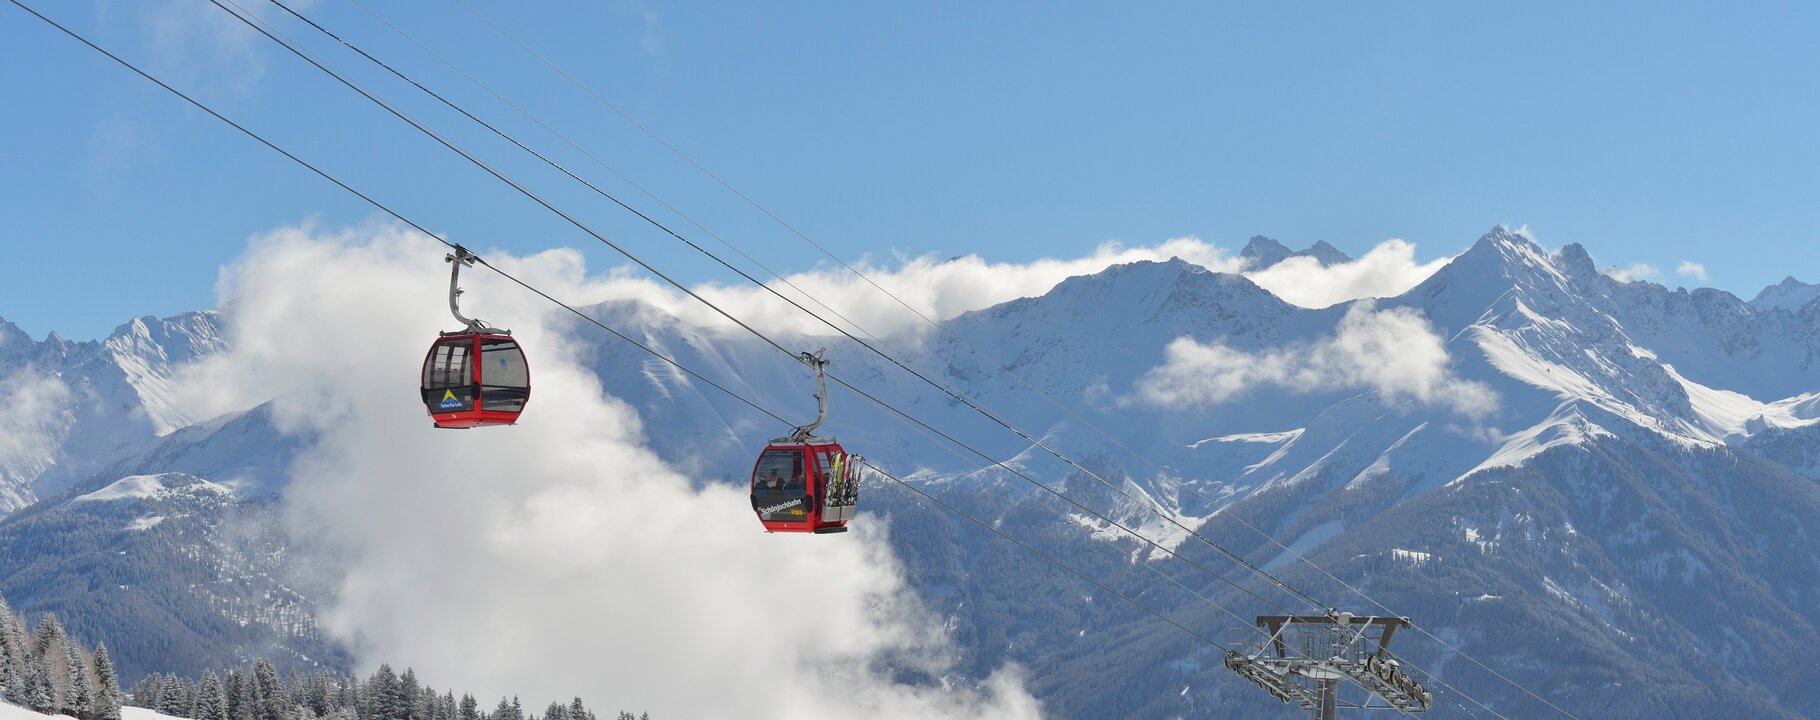 Skigebiet Serfaus-Fiss-Ladis in Tirol | © Sepp Mallaun